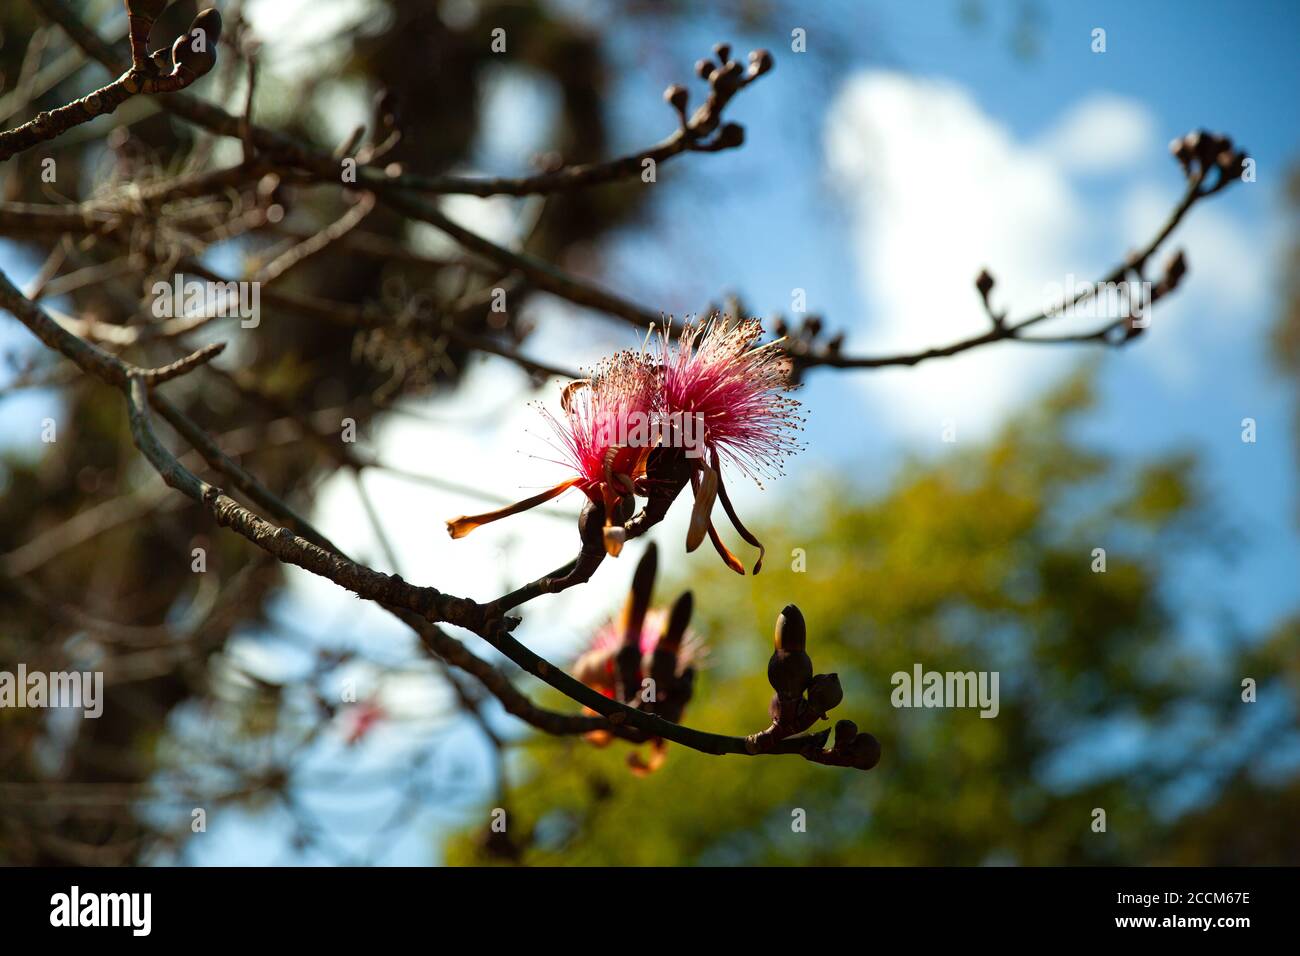 Pink pseudobombax ellipticum or shaving brush tree, Dr Seuss tree, Cienfuegos, Cuba Stock Photo